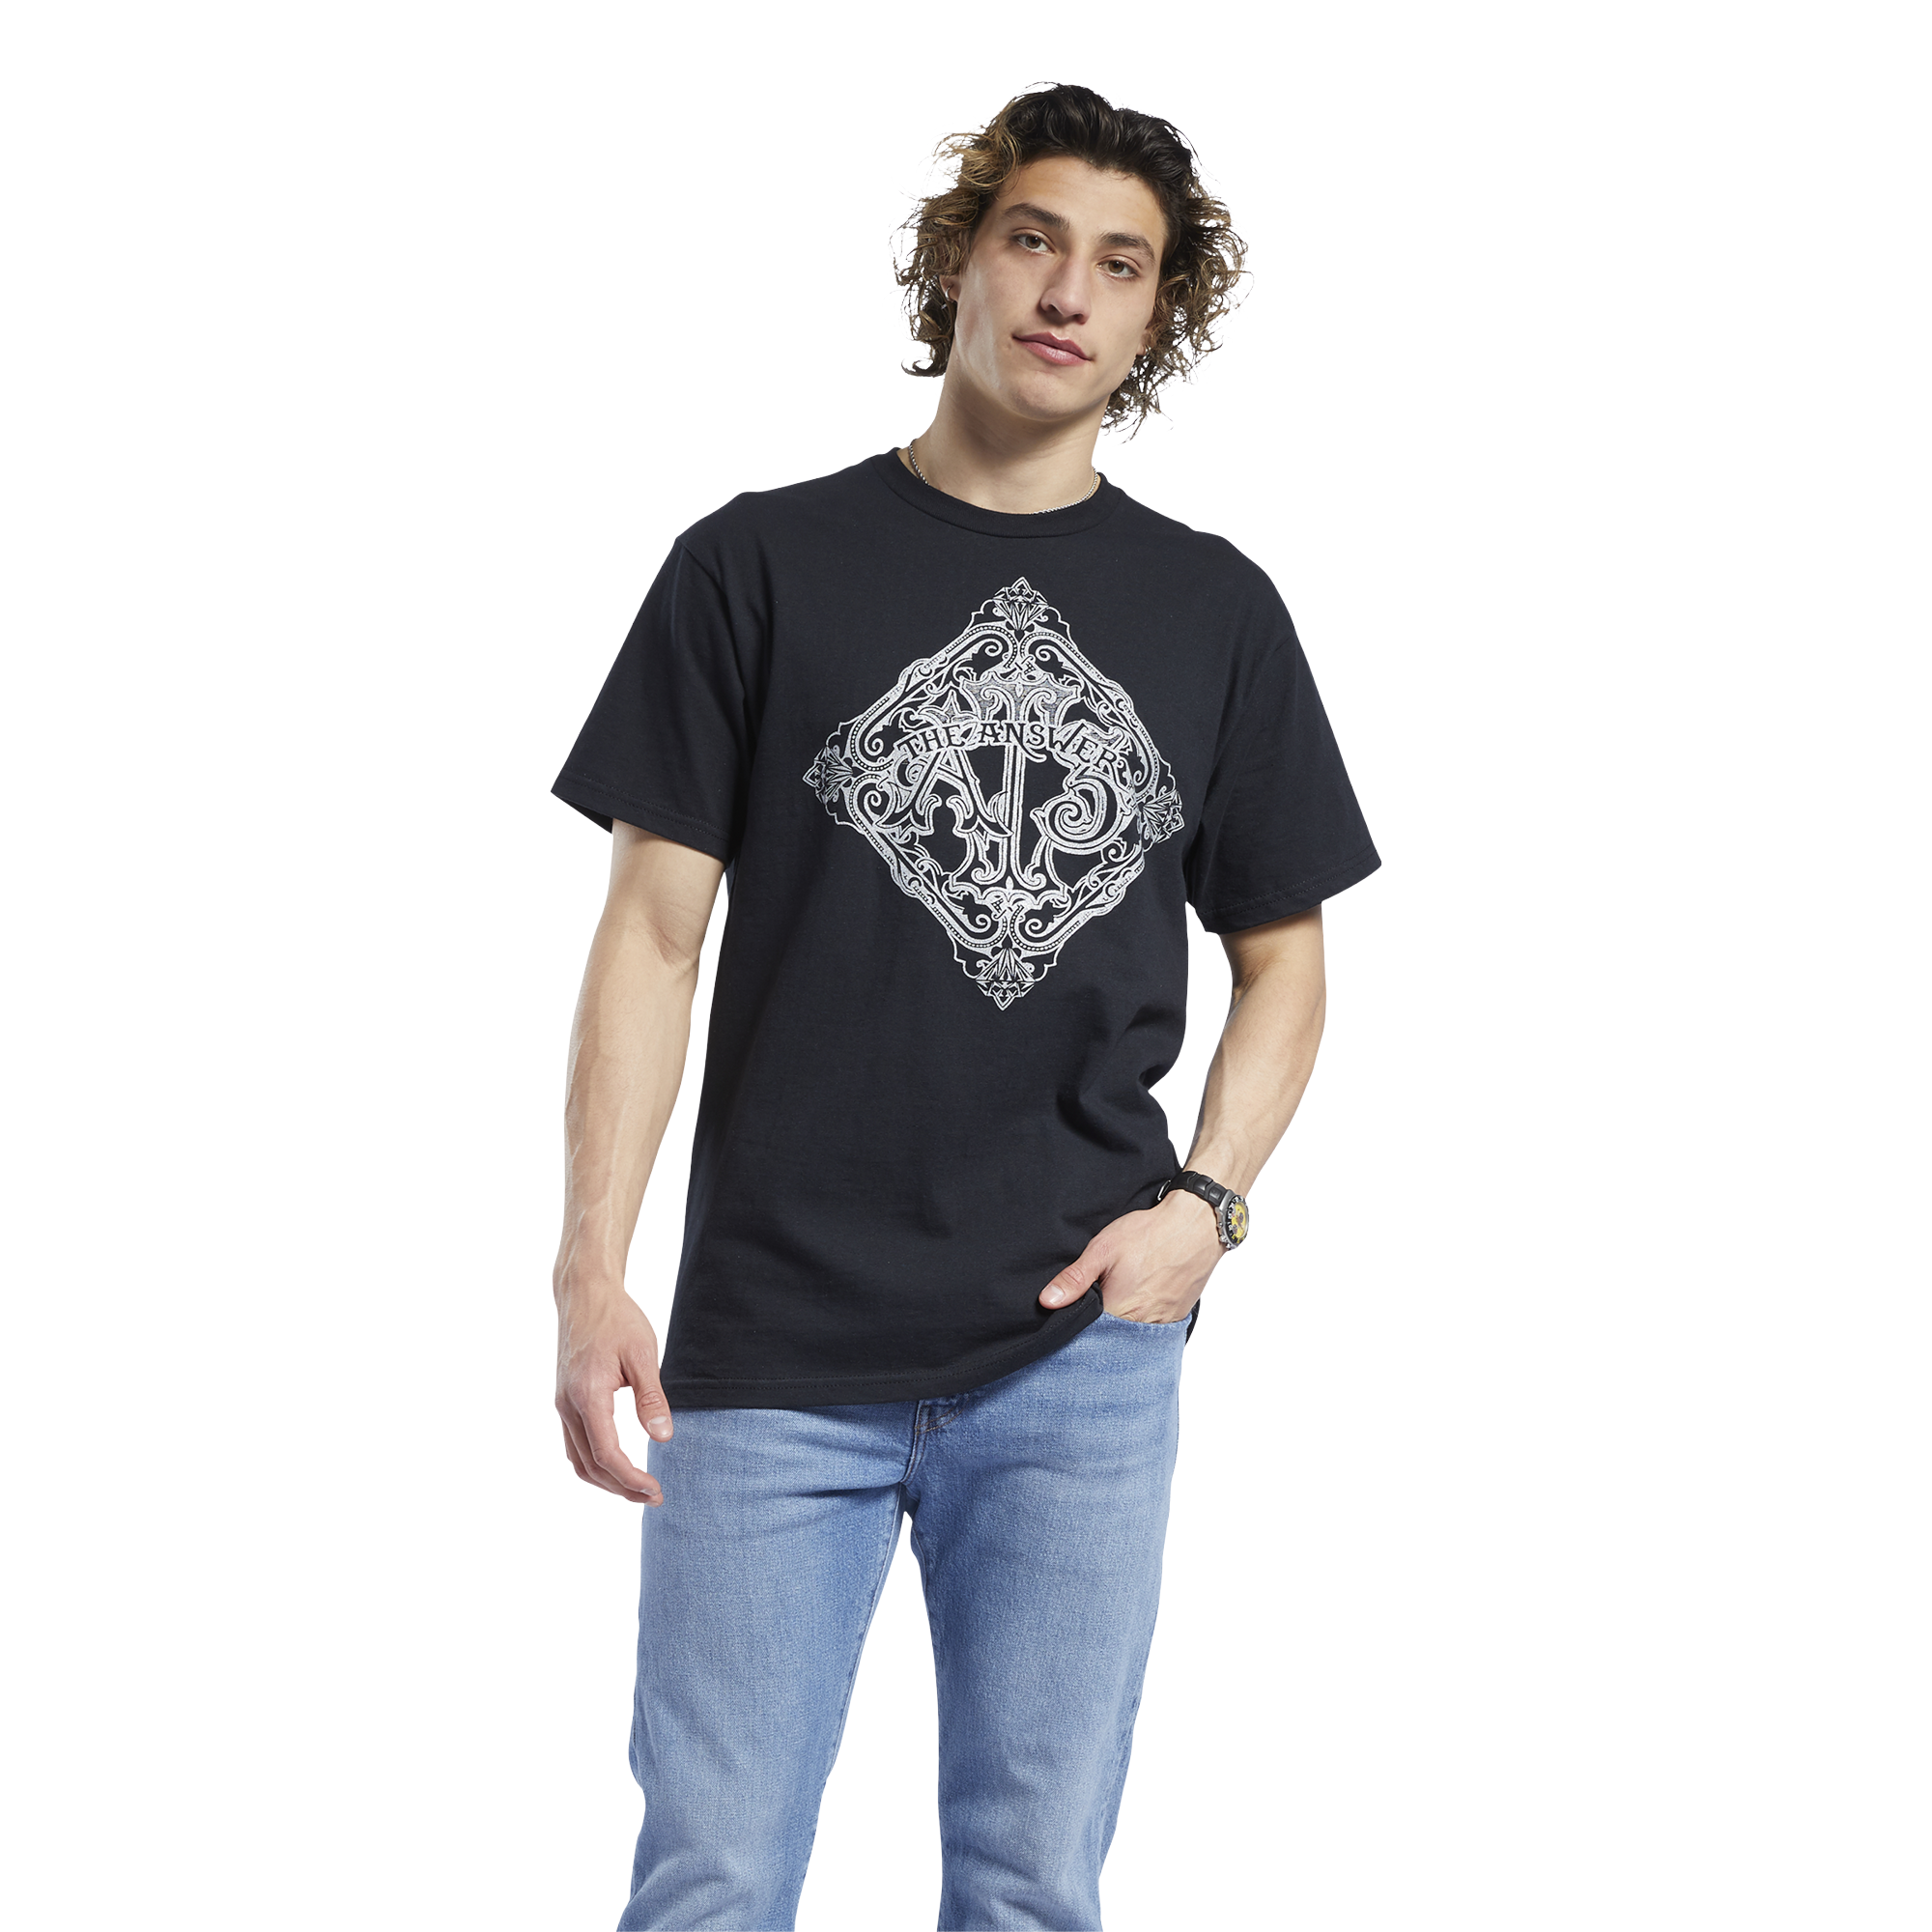 Reebok Allen Iverson Diamond T-Shirt